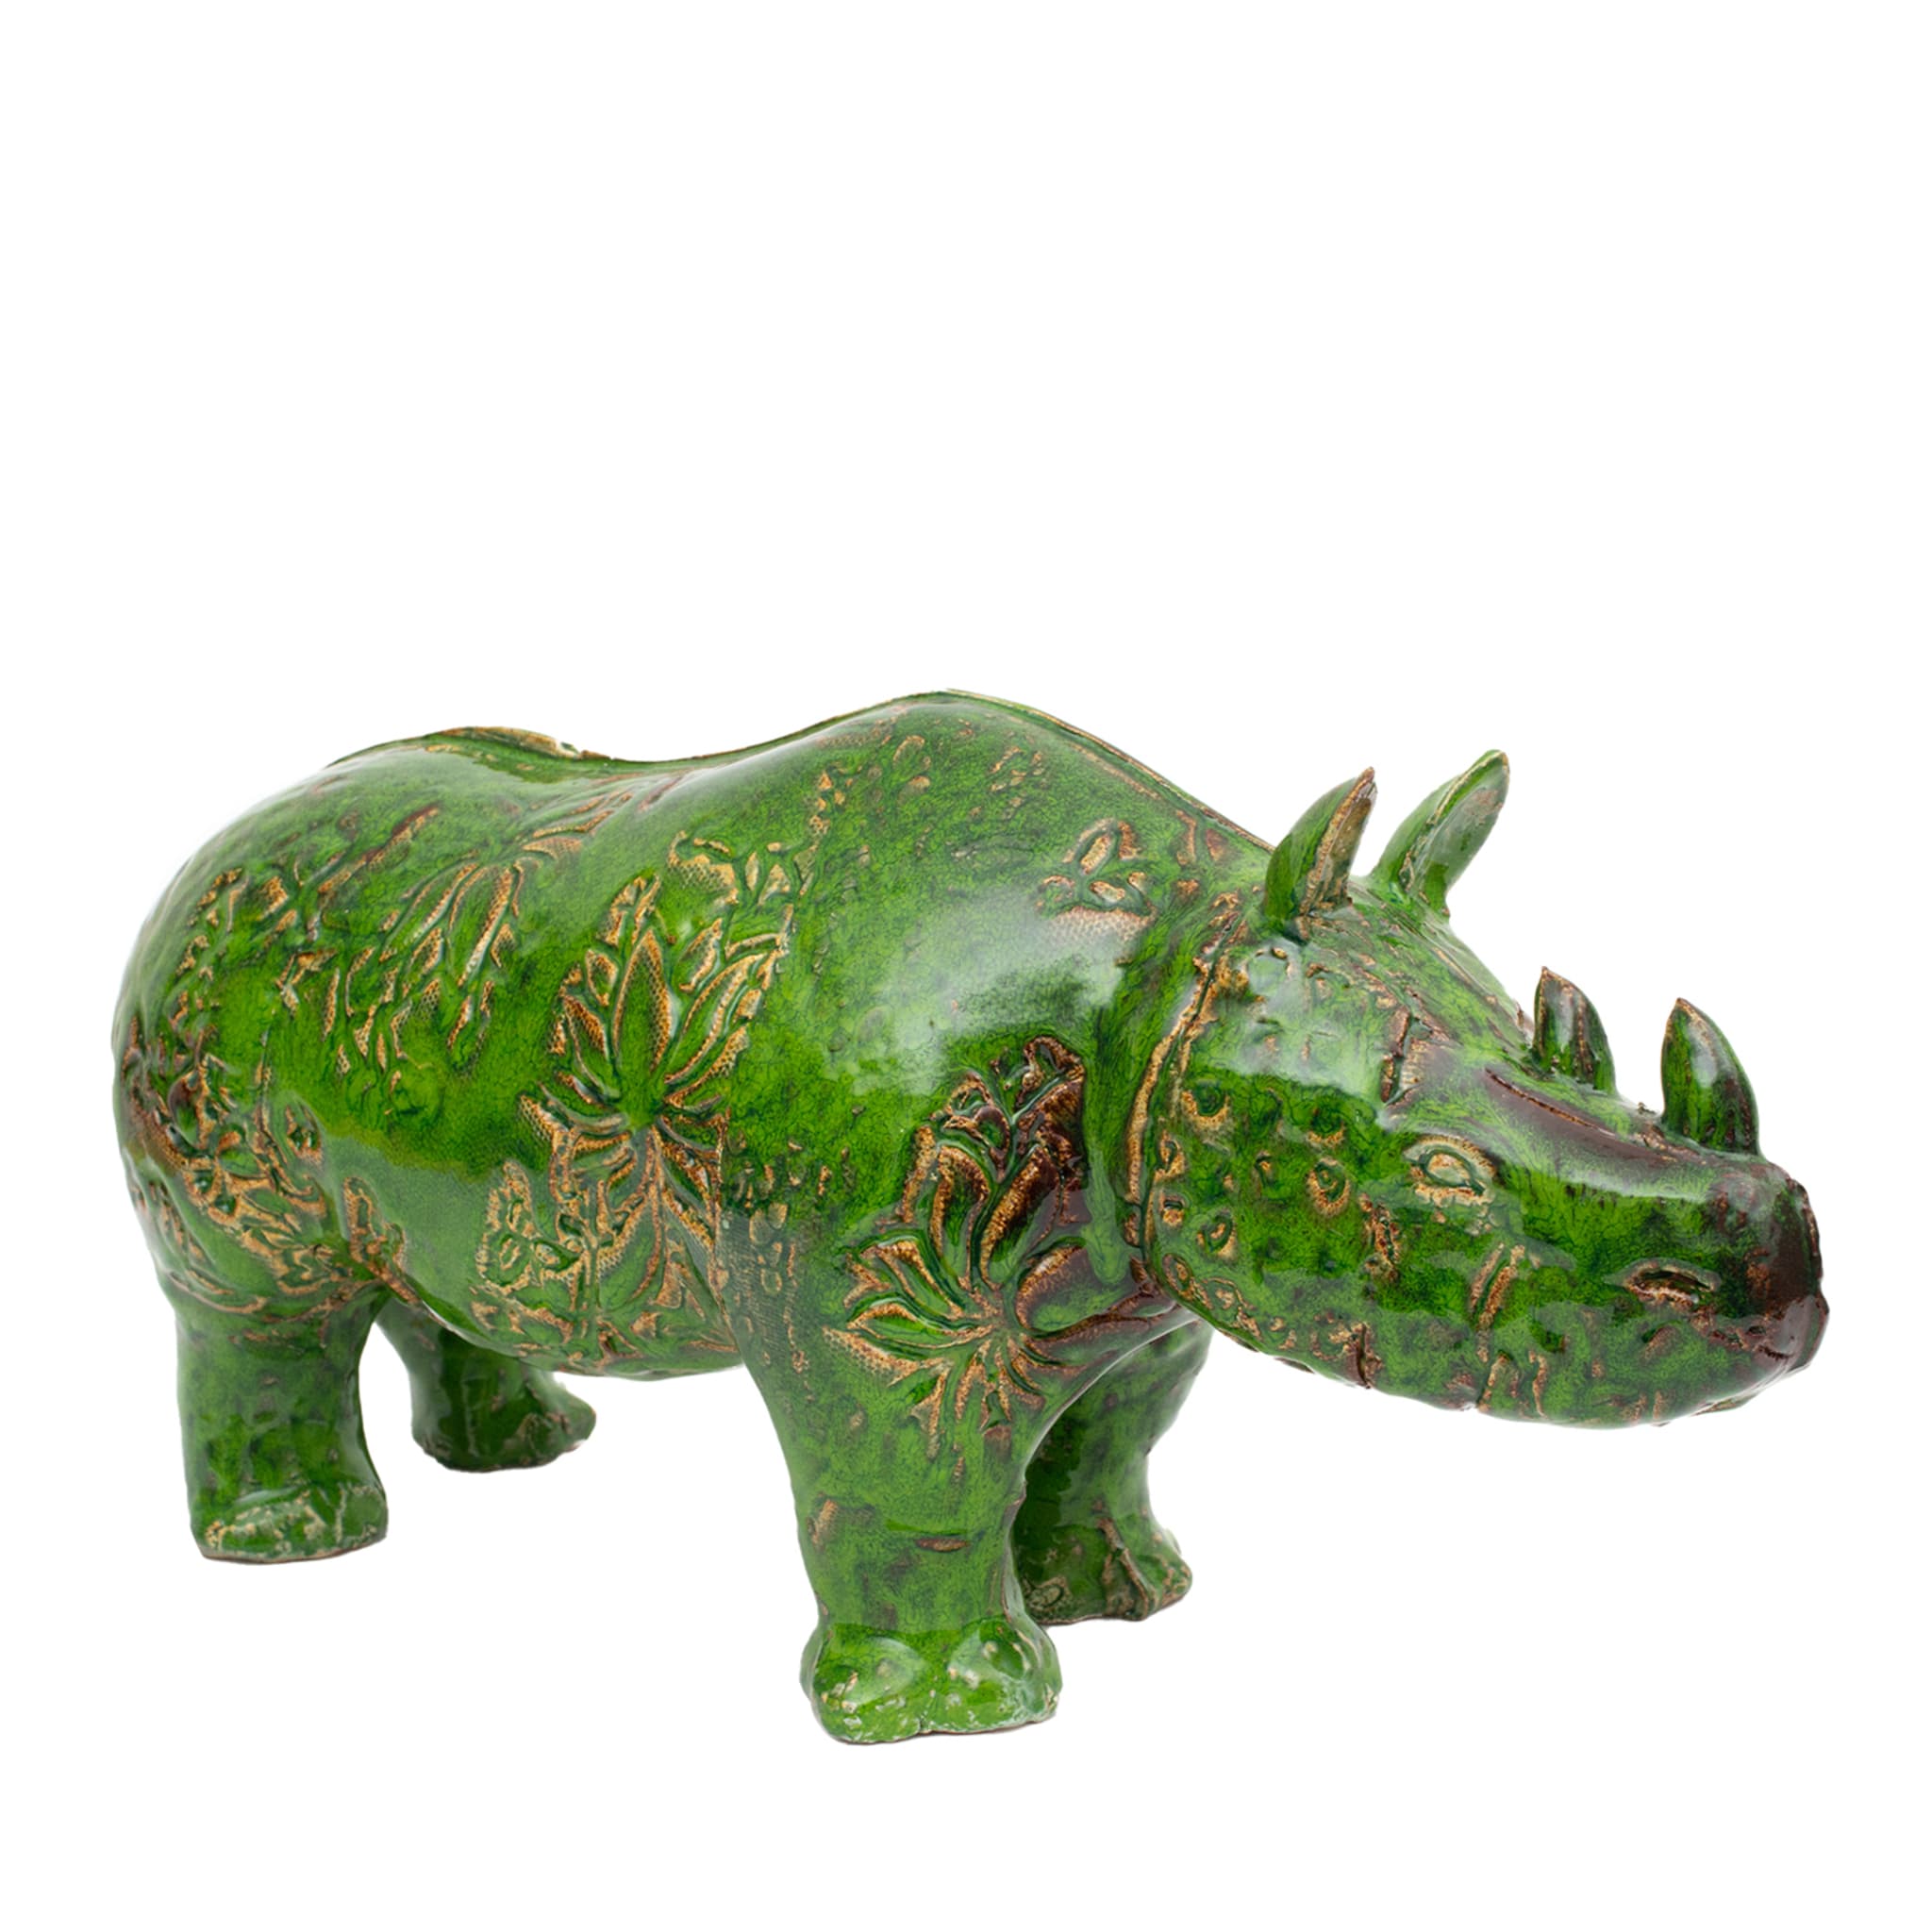 Rhino sculpture #2 - Main view